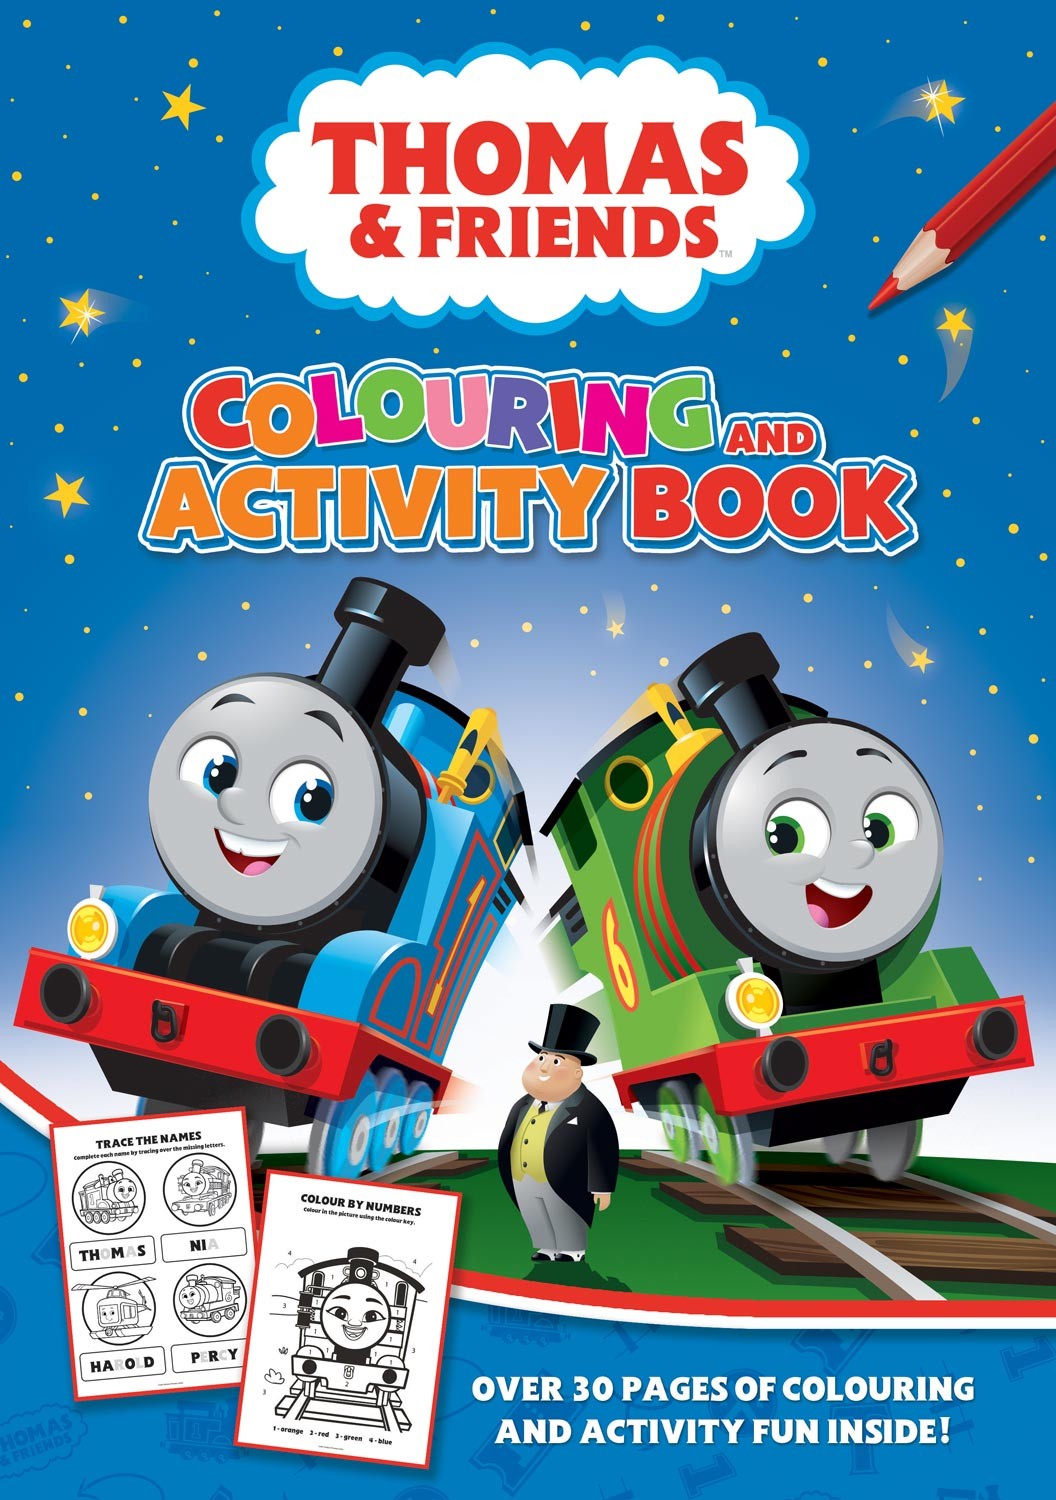 View Thomas Friends Colour Activity Book information